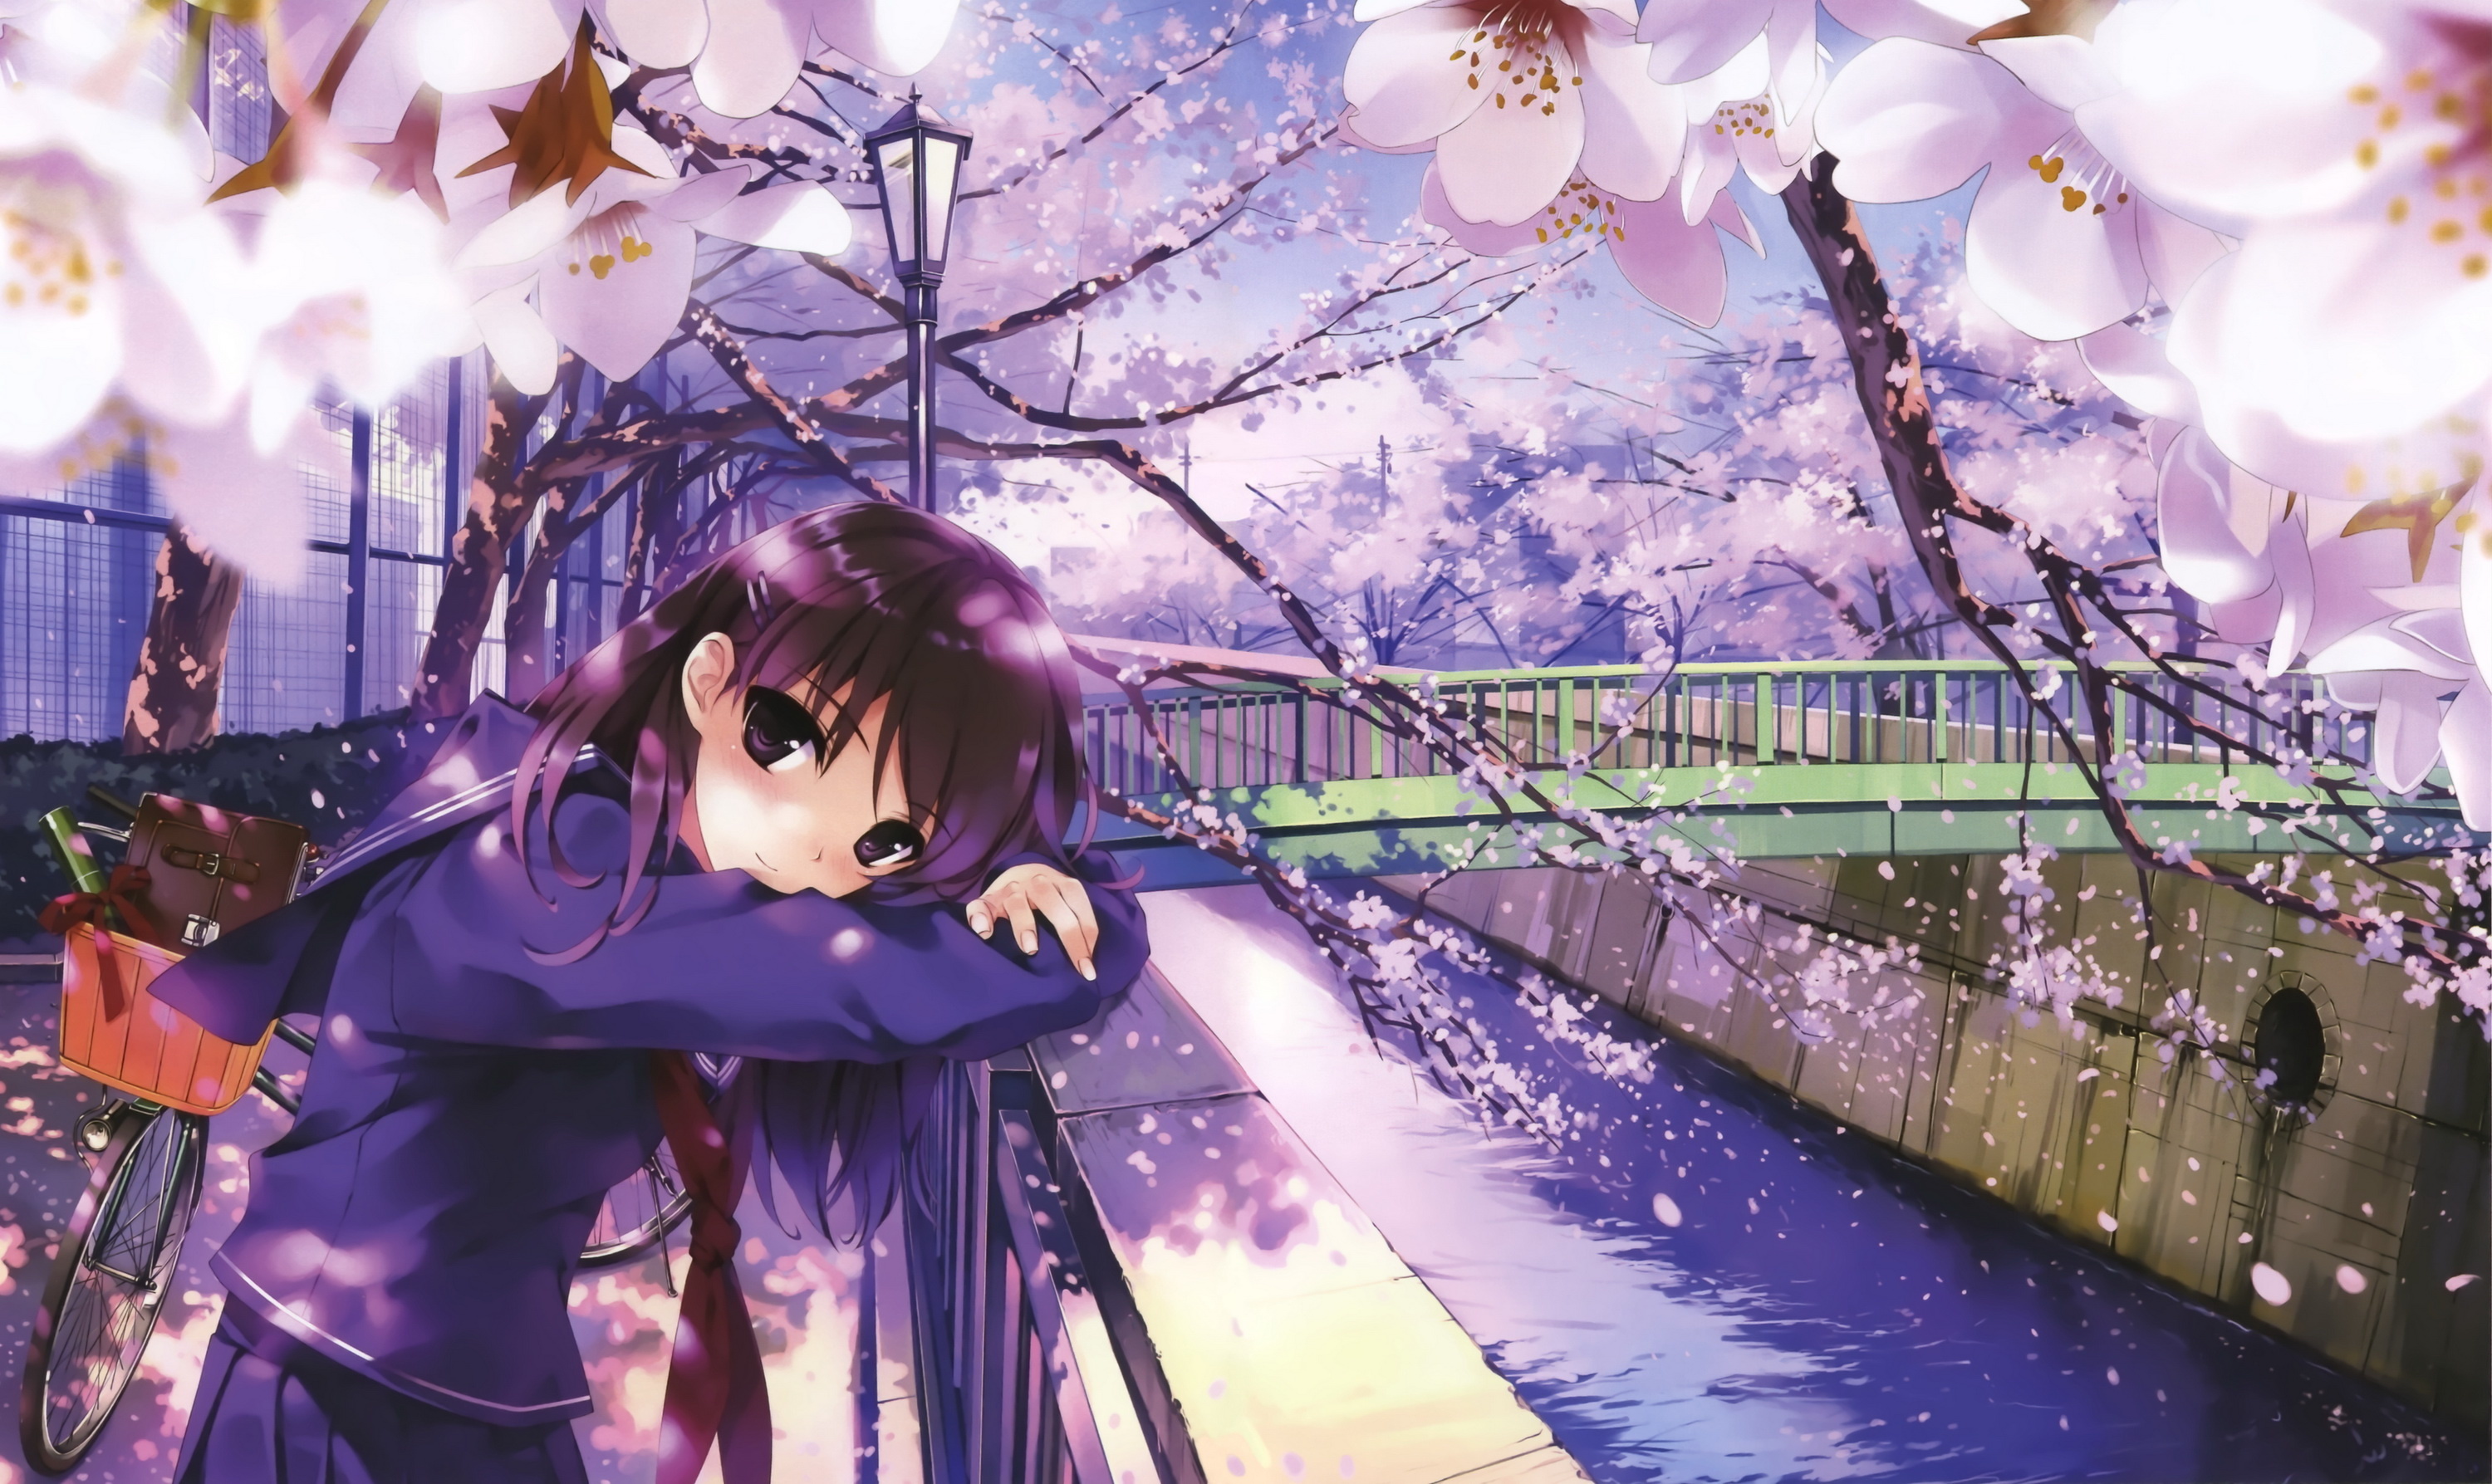 Anime Girl Under Cherry Blossom Tree - 3000x1787 Wallpaper 